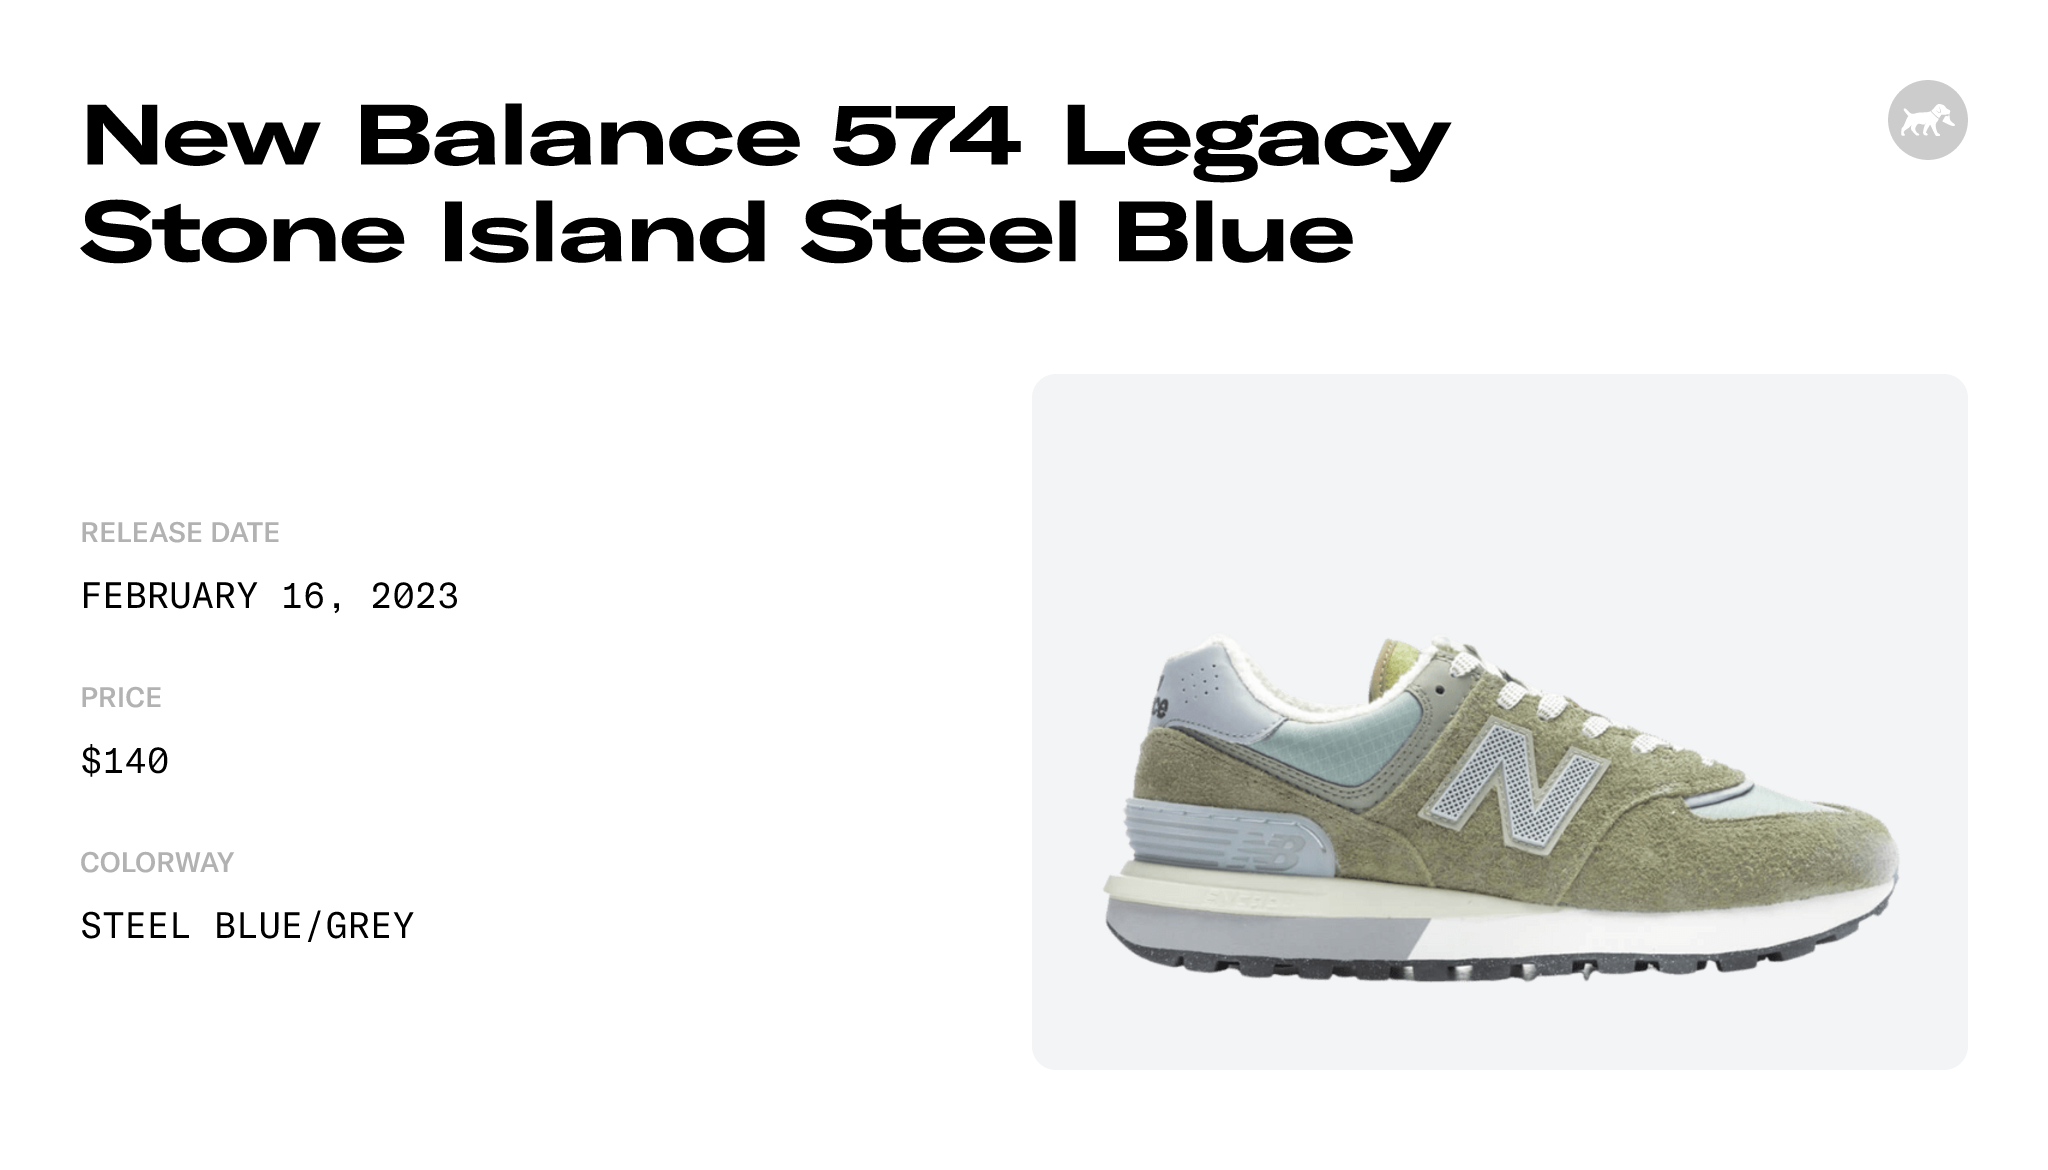 New Balance 574 Legacy Stone Island Steel Blue Raffles and Release